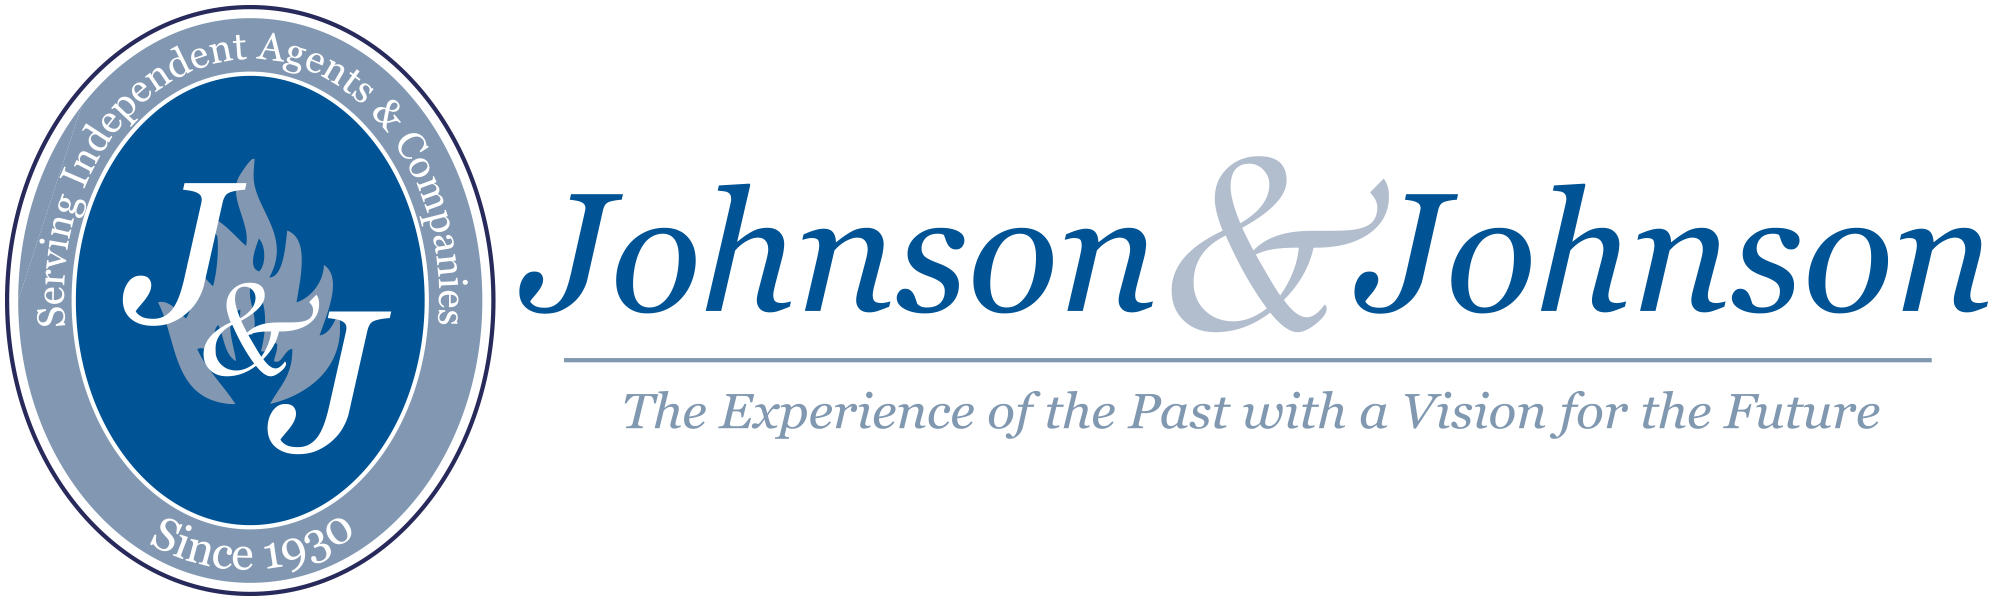 Johnson & Johnson, Inc. logo